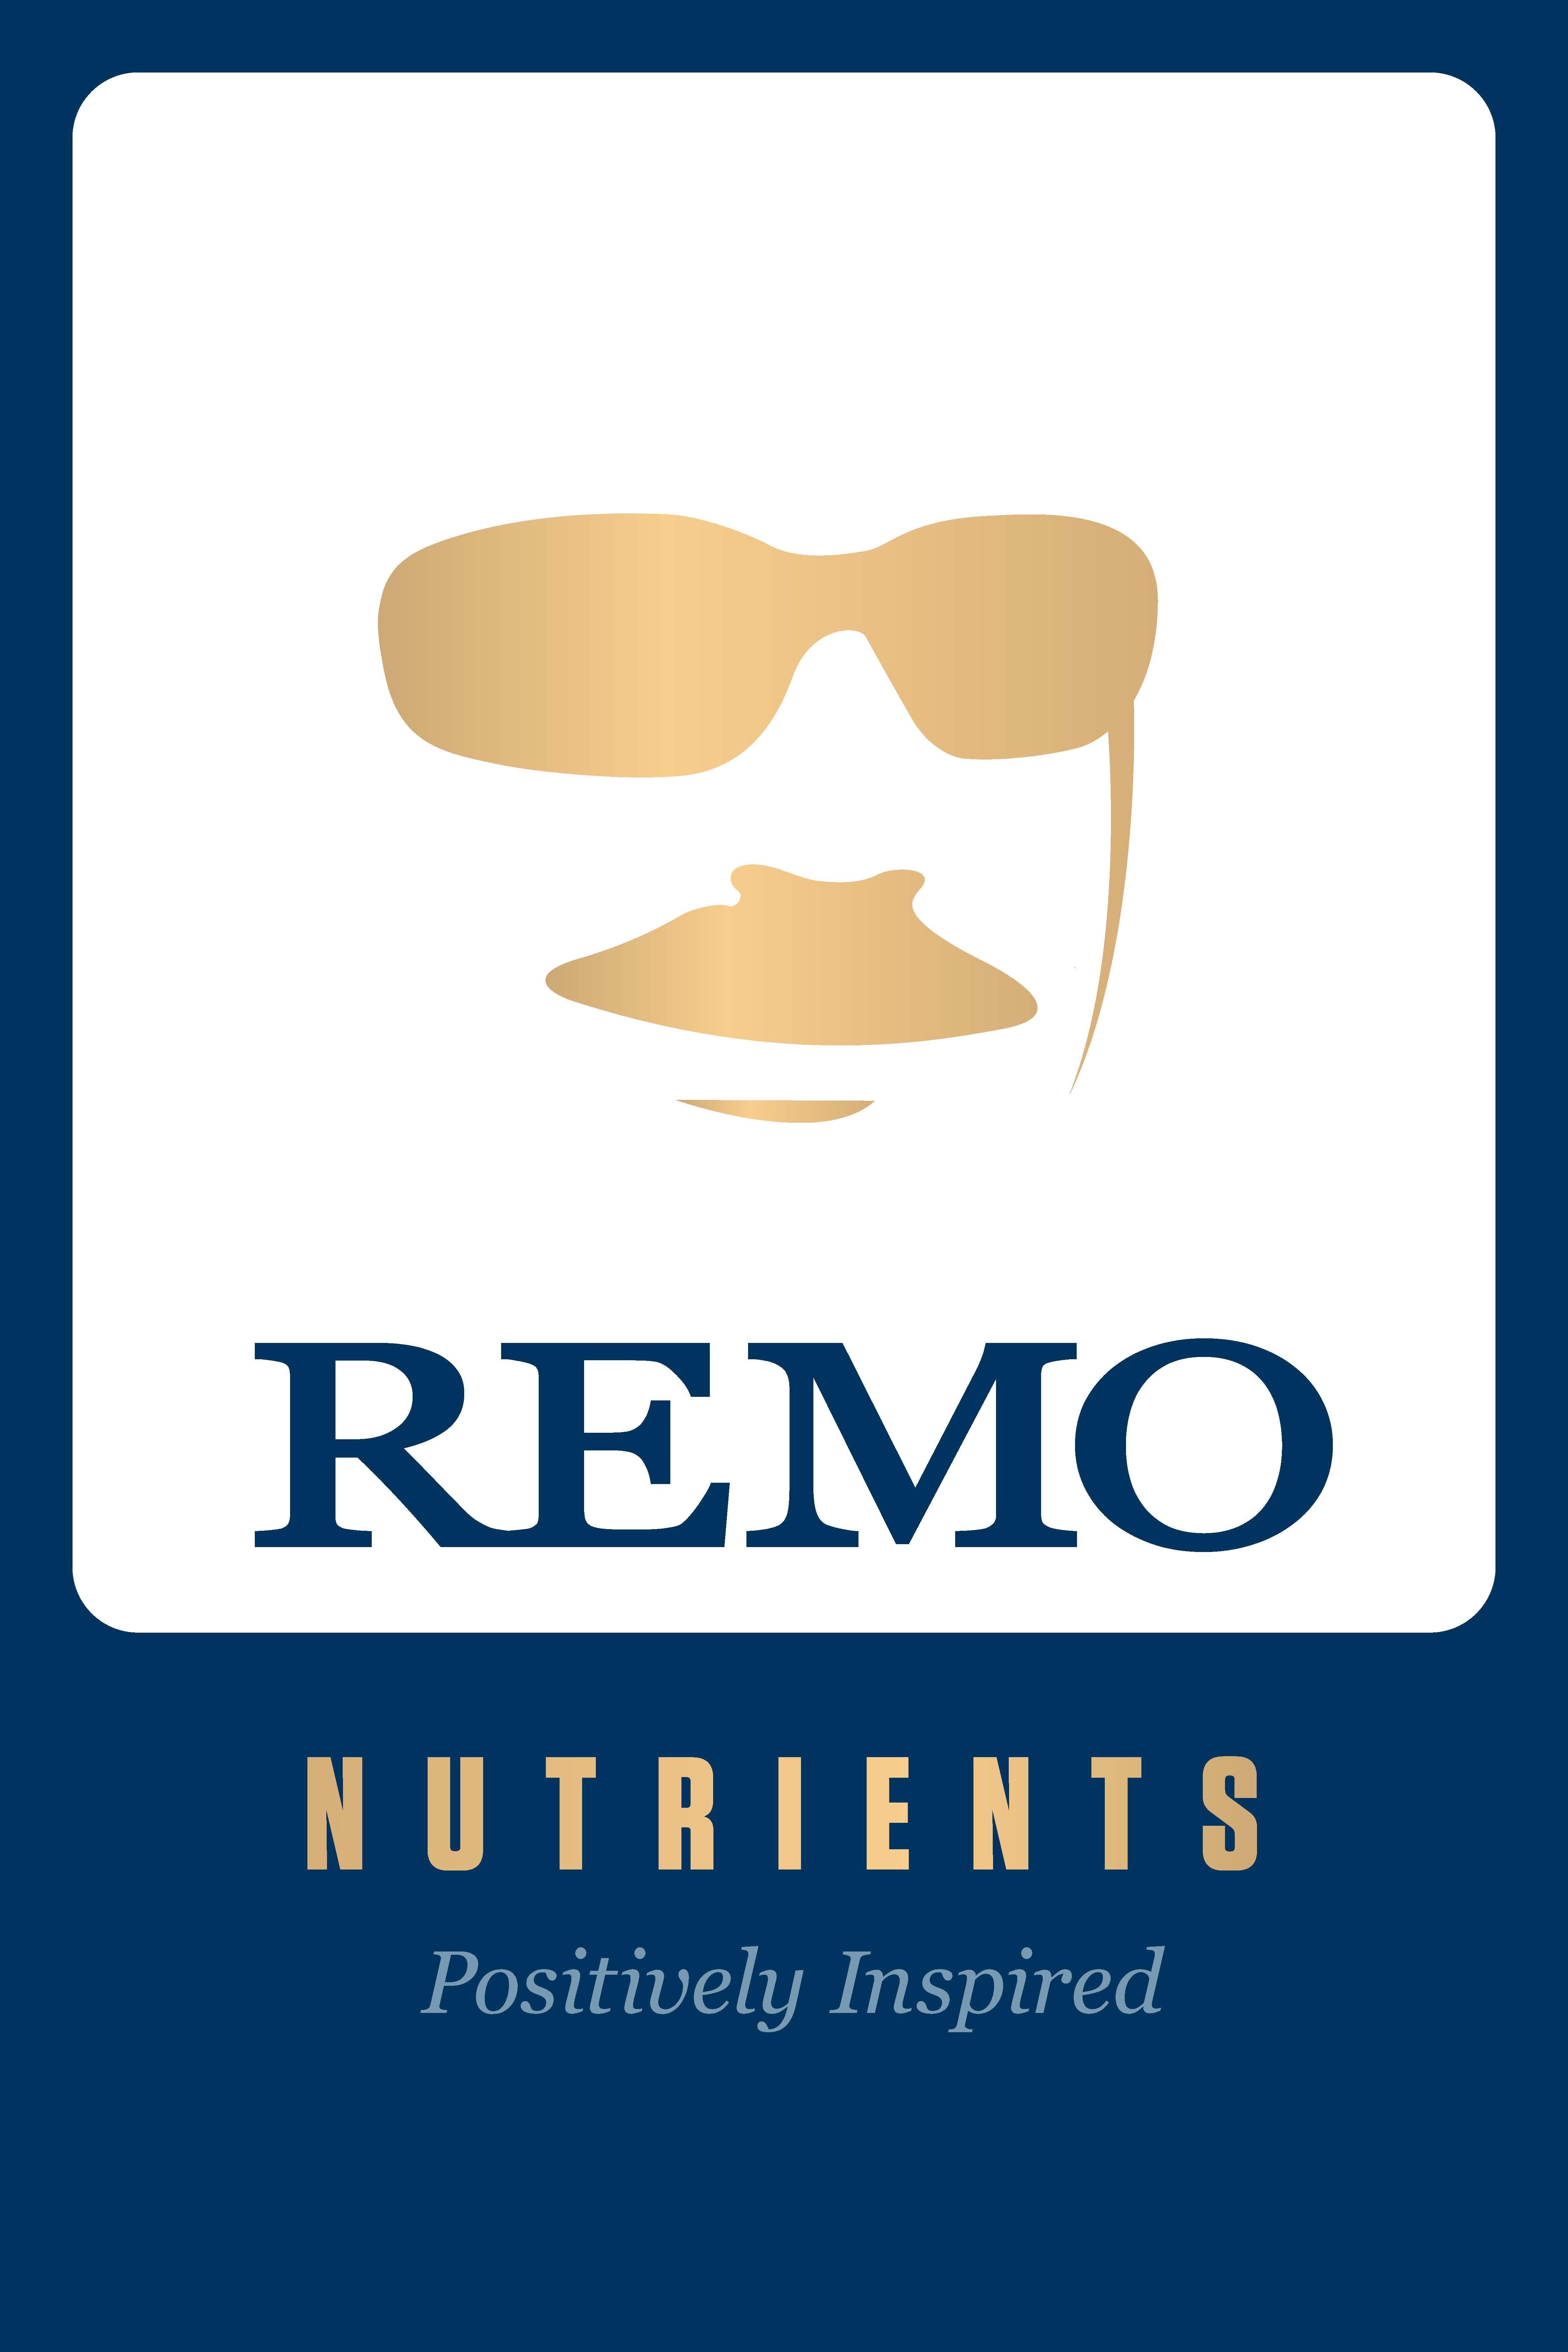 Nutrient Logo - Remo Nutrients Product Image Grow Ltd